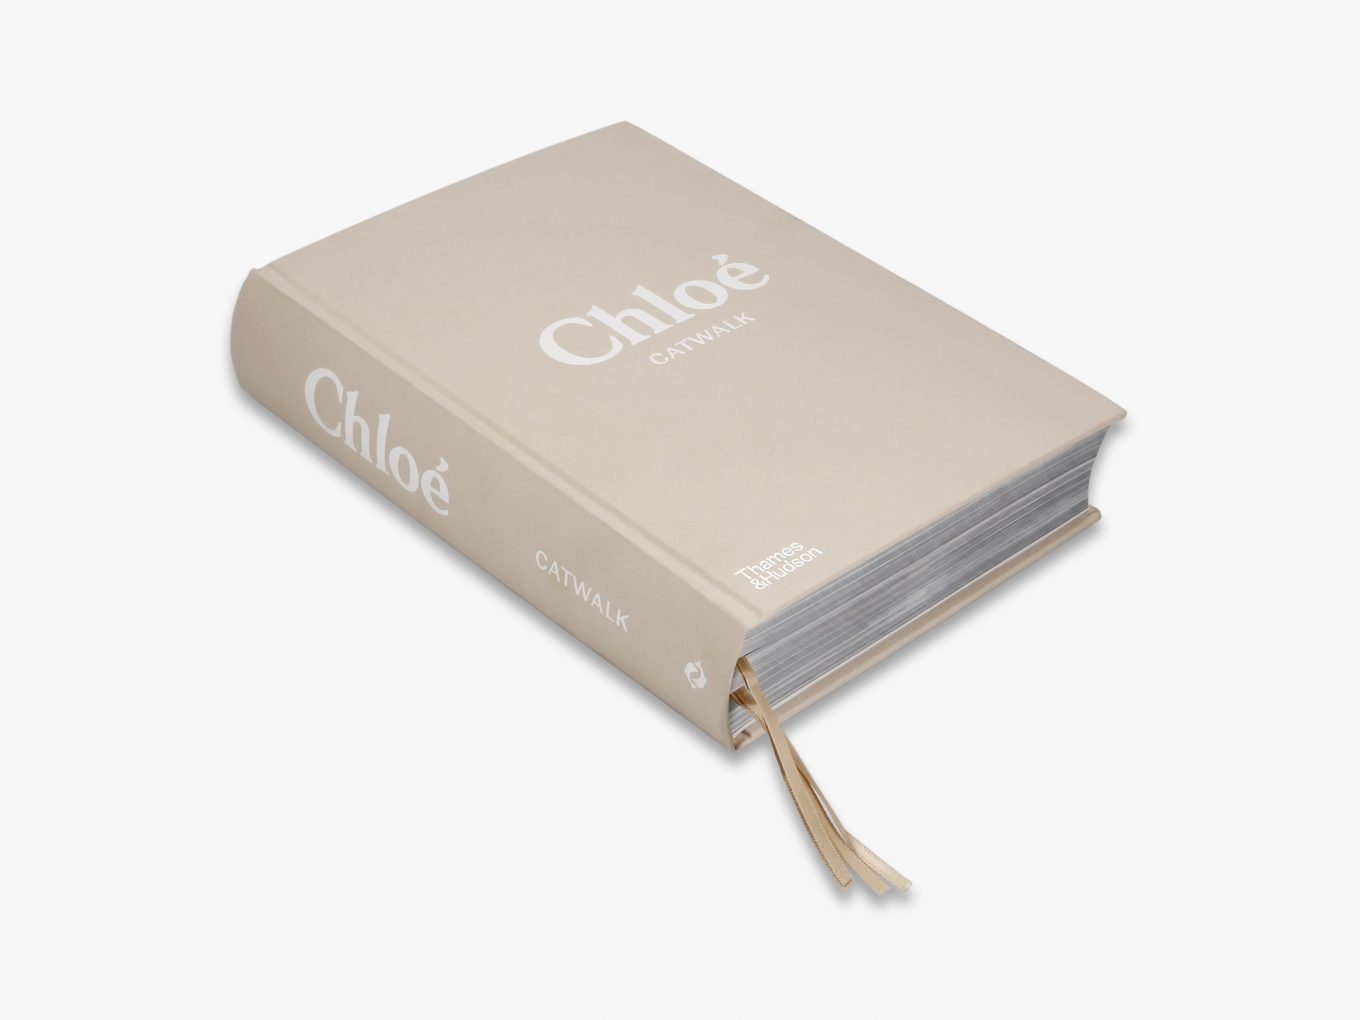 Chloé Catwalk – High Valley Books